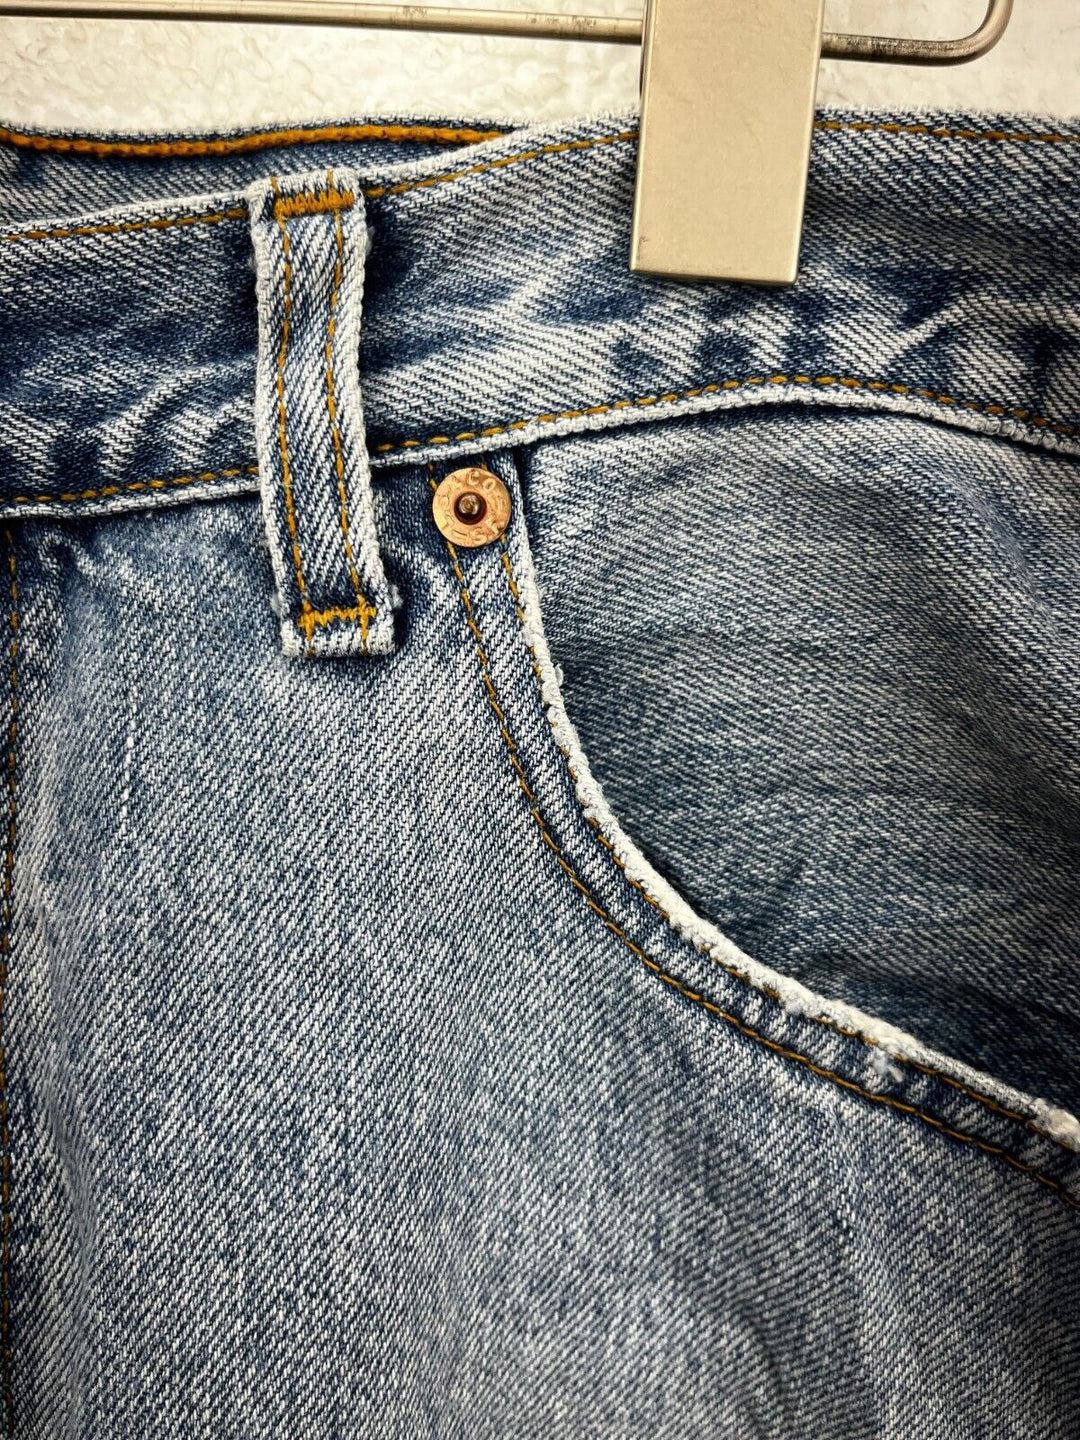 Vintage Levi Strauss 501 Light Wash Blue Denim Jeans Size 34 x 34